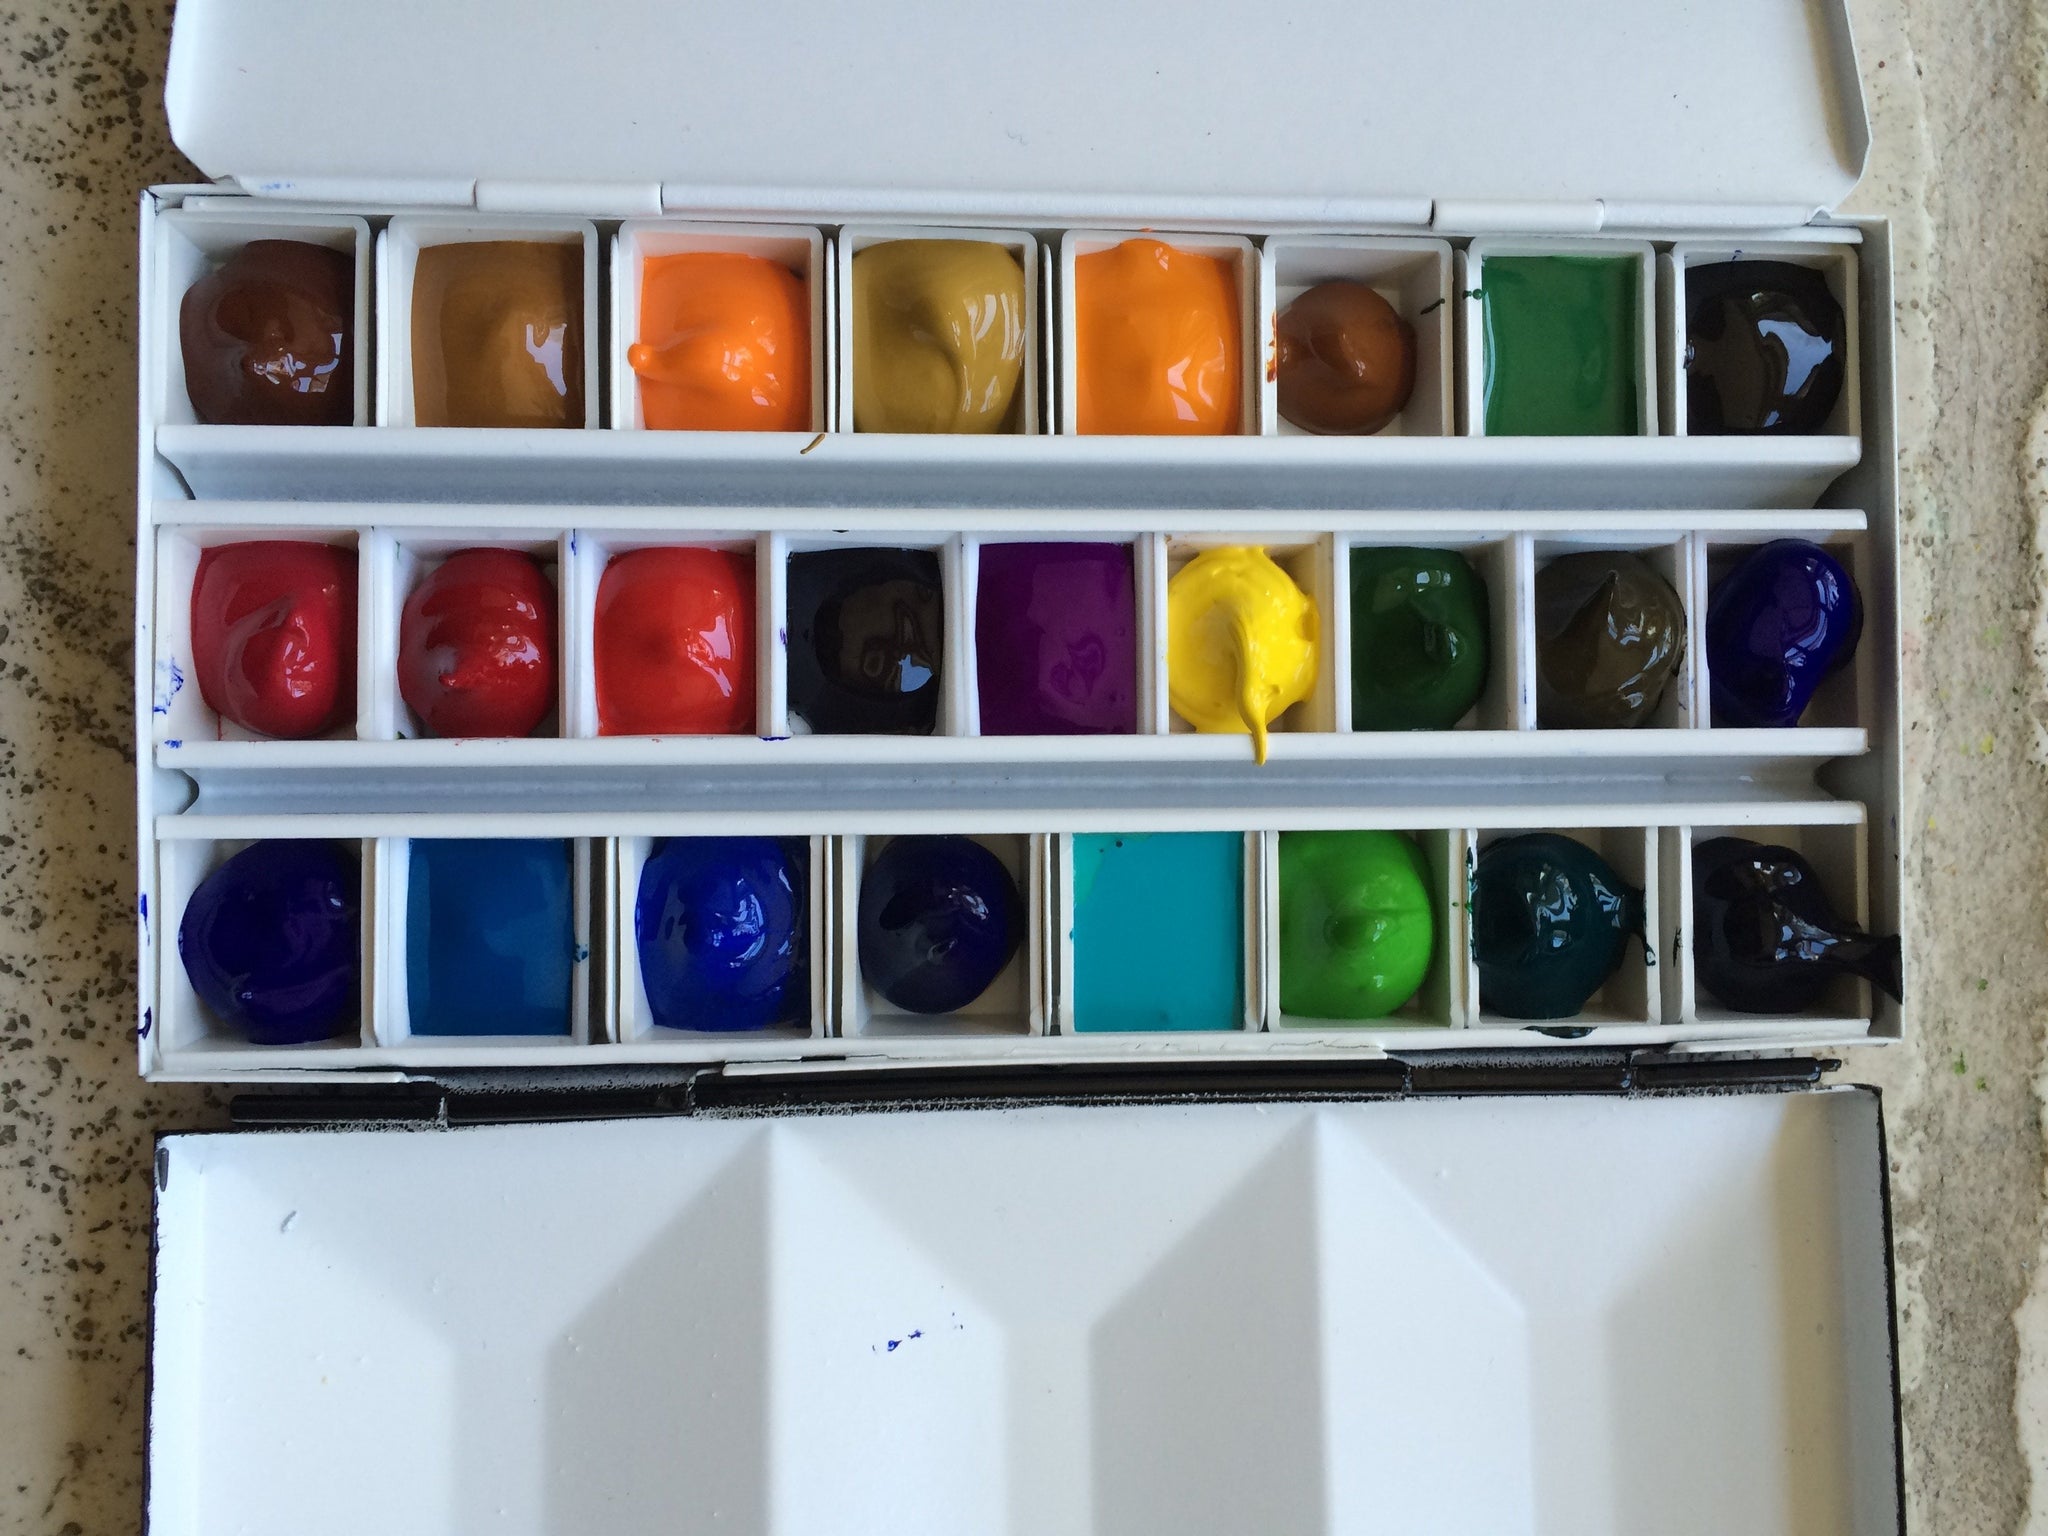 Divolo Metal Box Set - Extra-Fine Watercolors for Artists - 1/2 Pans - Assorted Colors 24 Piece Set